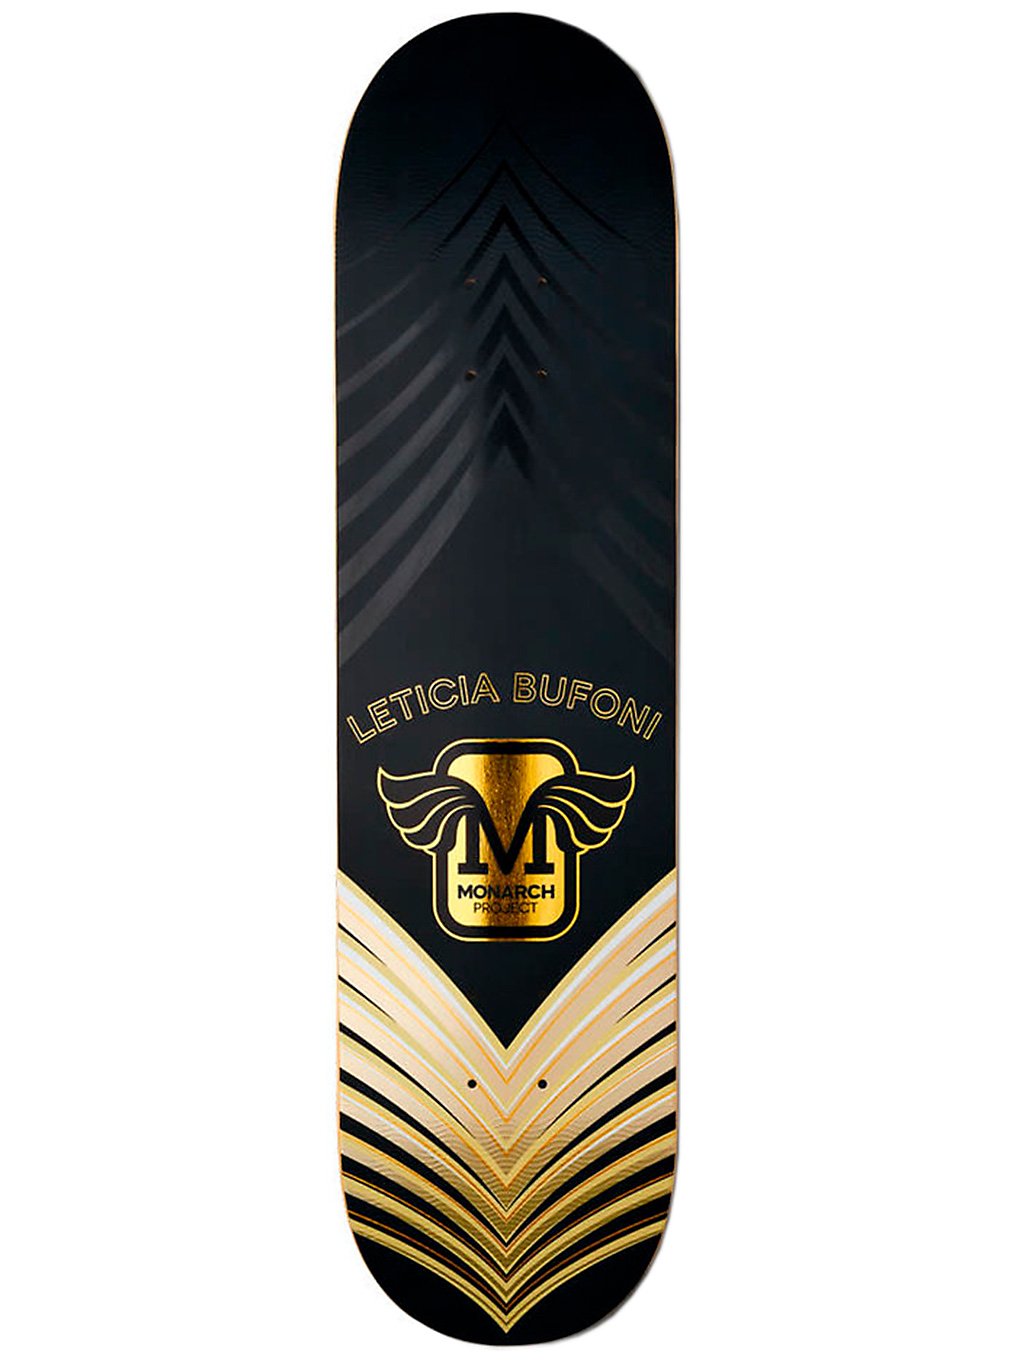 Monarch Project Horus R7 Leticia Bufoni 8" Skateboard Deck gold kaufen